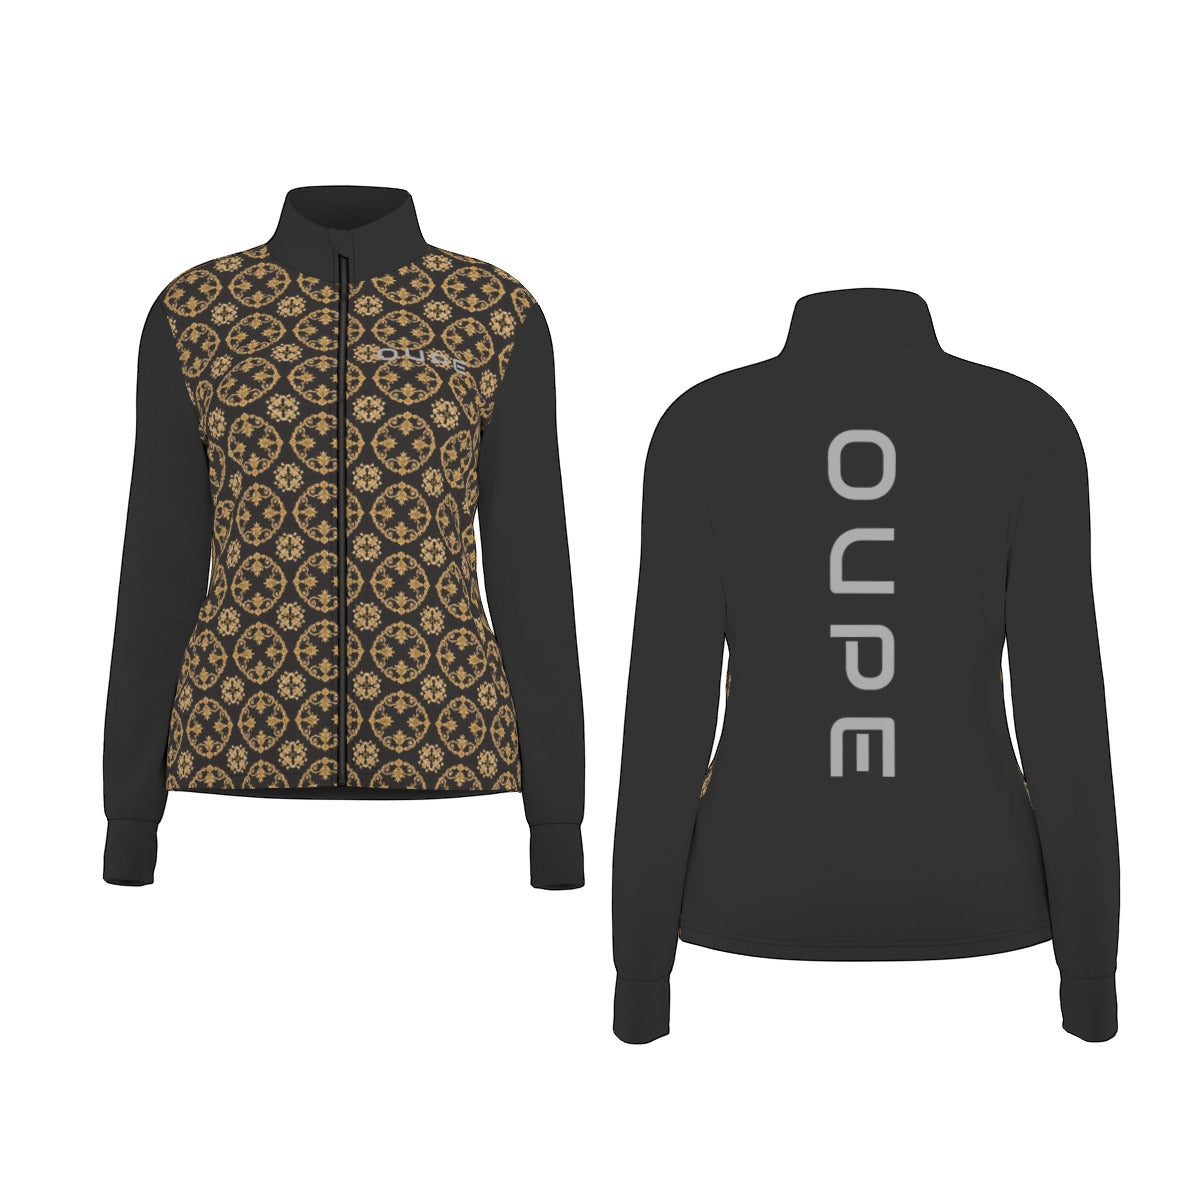 OUPE All-Over Print Women's Long Sleeve Thumbhole Jacket